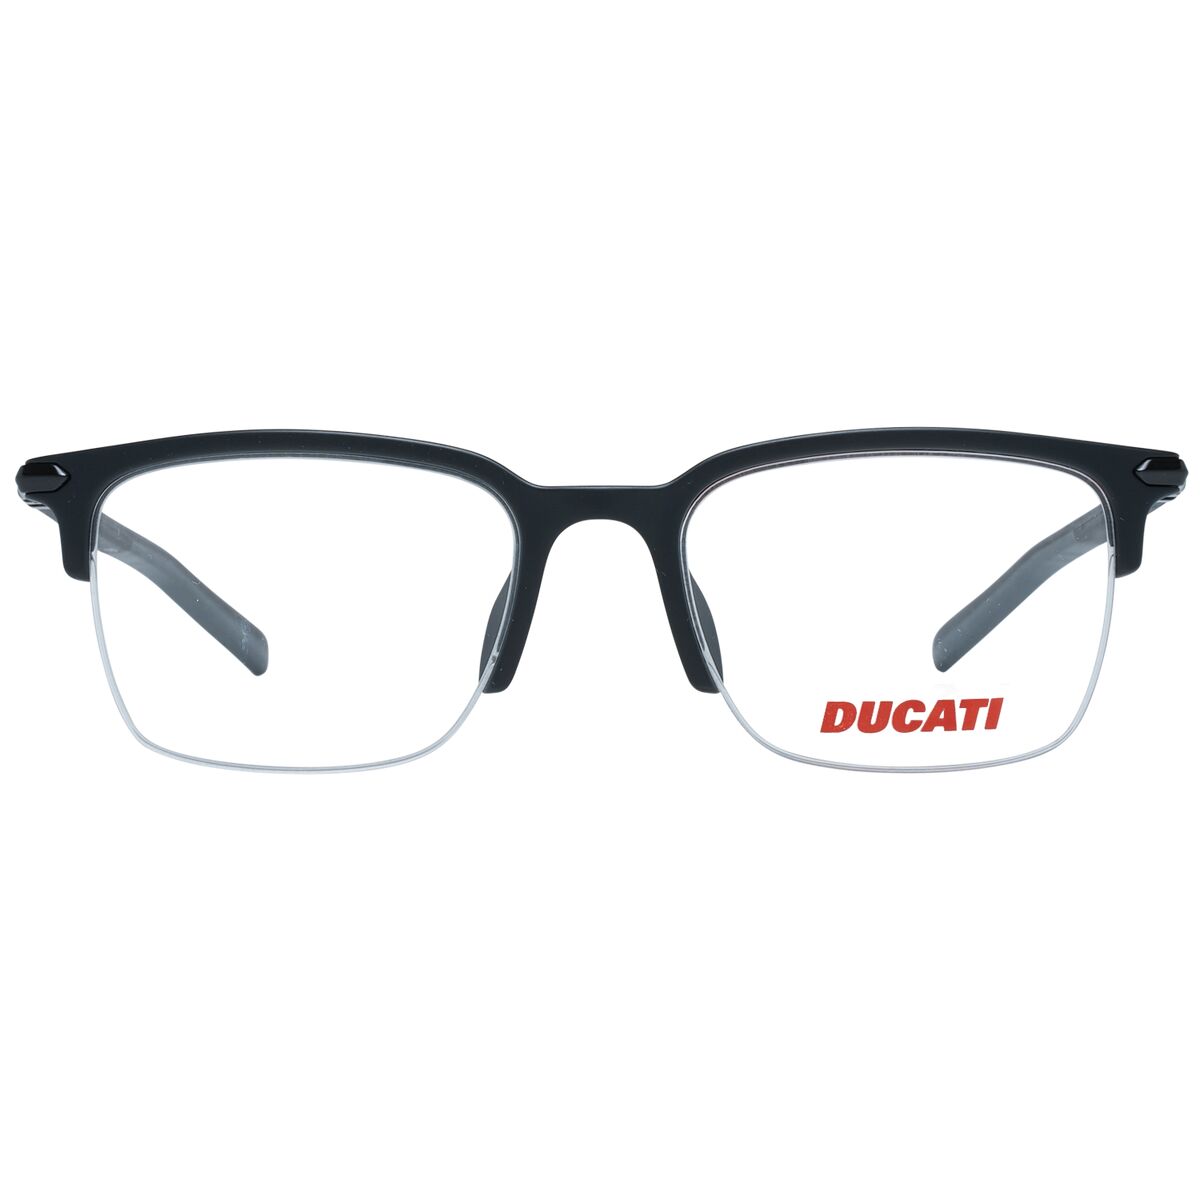 Kaufe Brillenfassung Ducati DA1003 52002 bei AWK Flagship um € 67.00